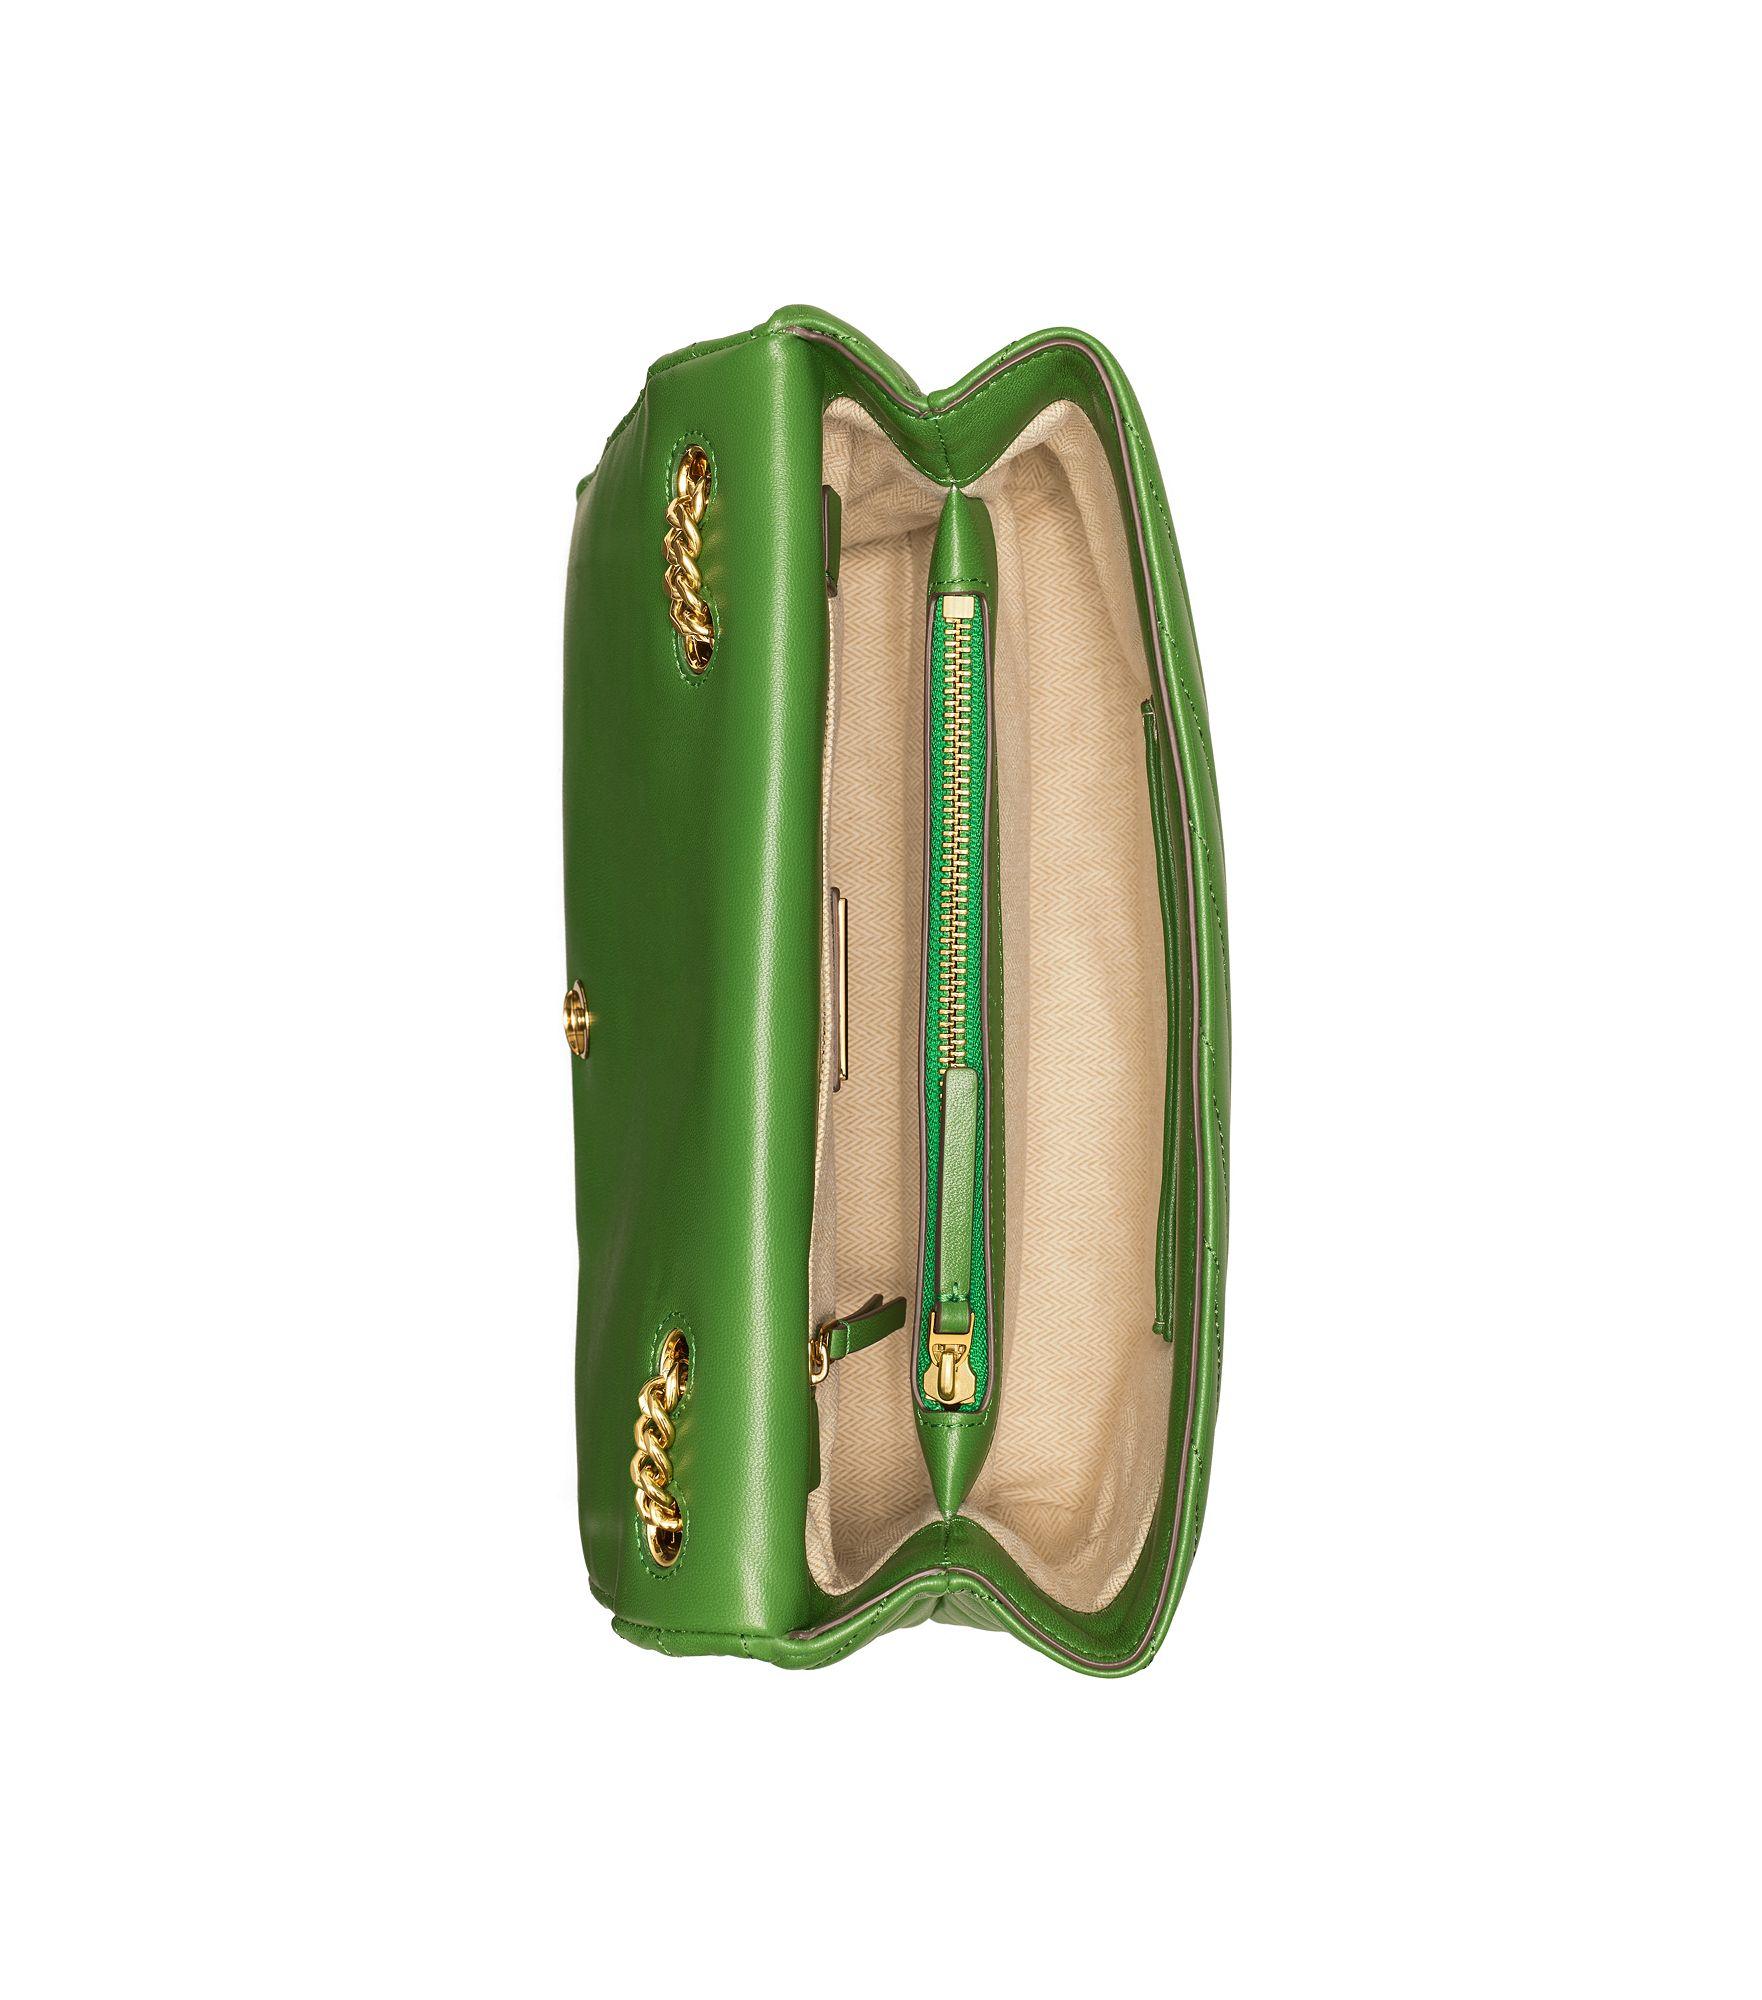 Tory Burch 90452 KIRA CHEVRON SMALL CONVERTIBLE SHOULDER Bag Green